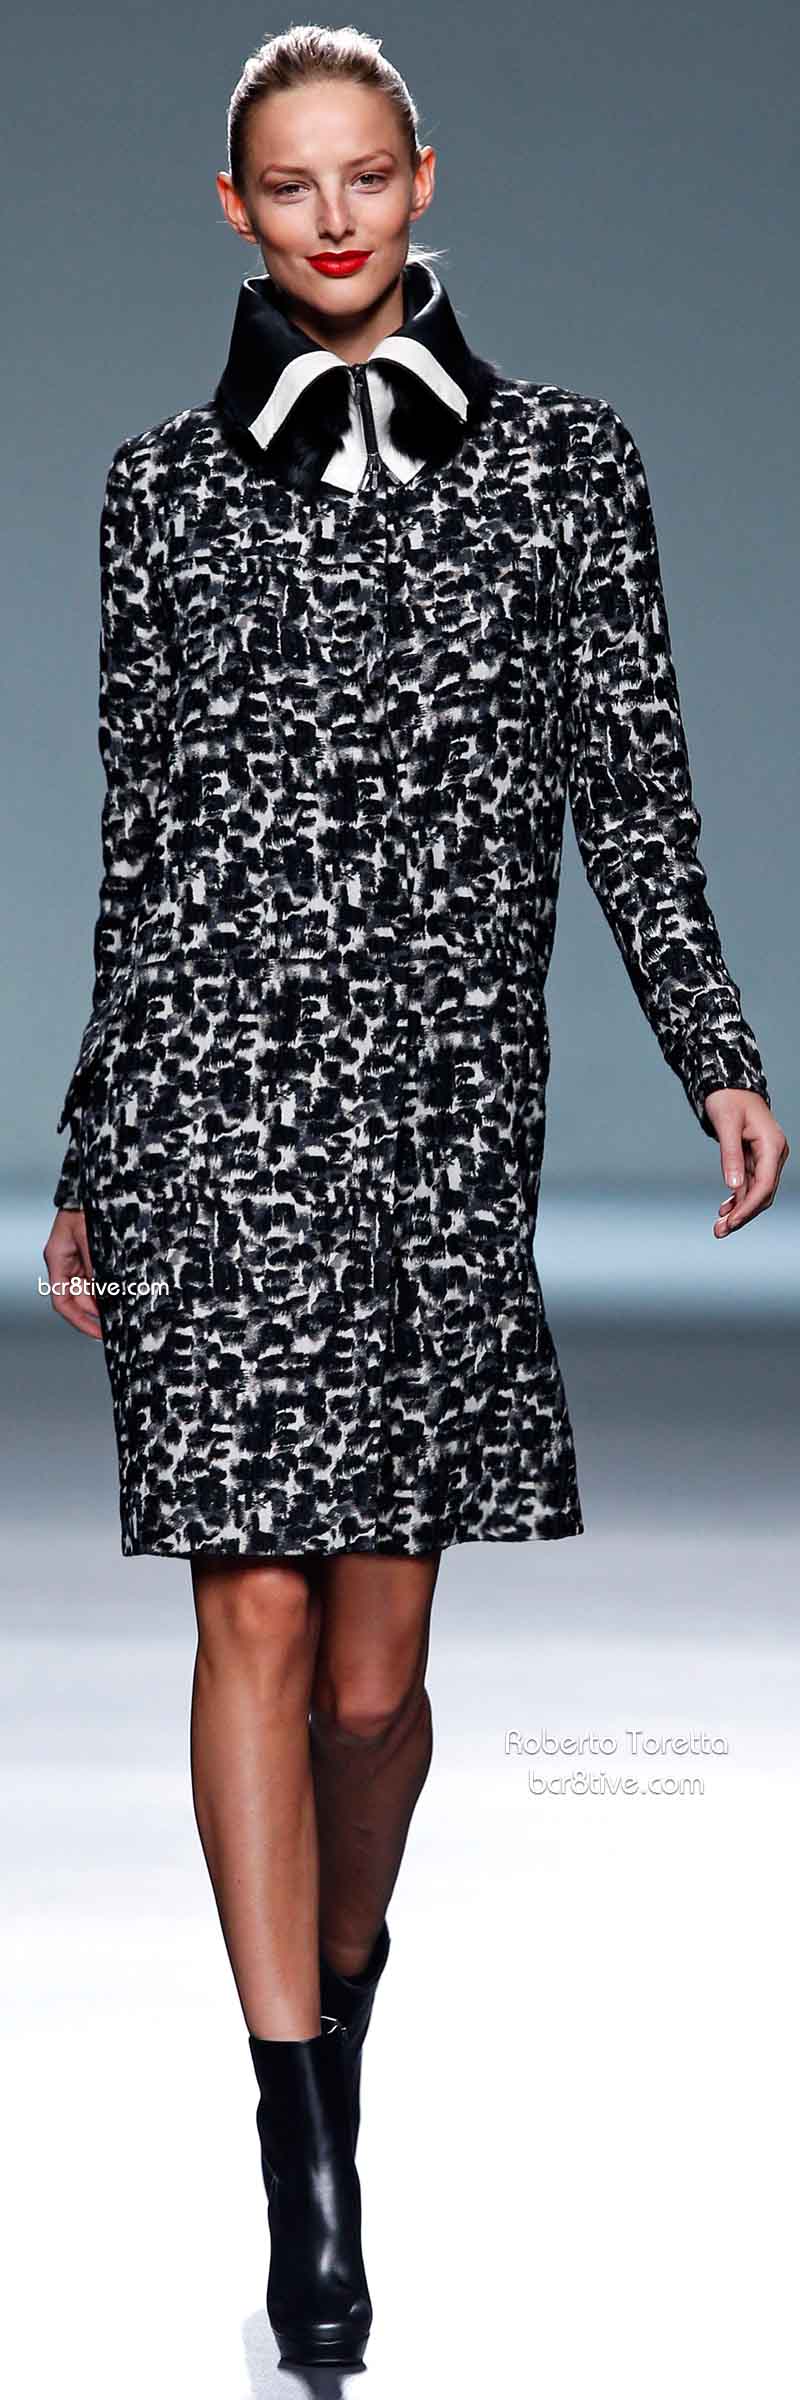 Fall 2014 Menswear Inspired Fashion - Roberto Torretta